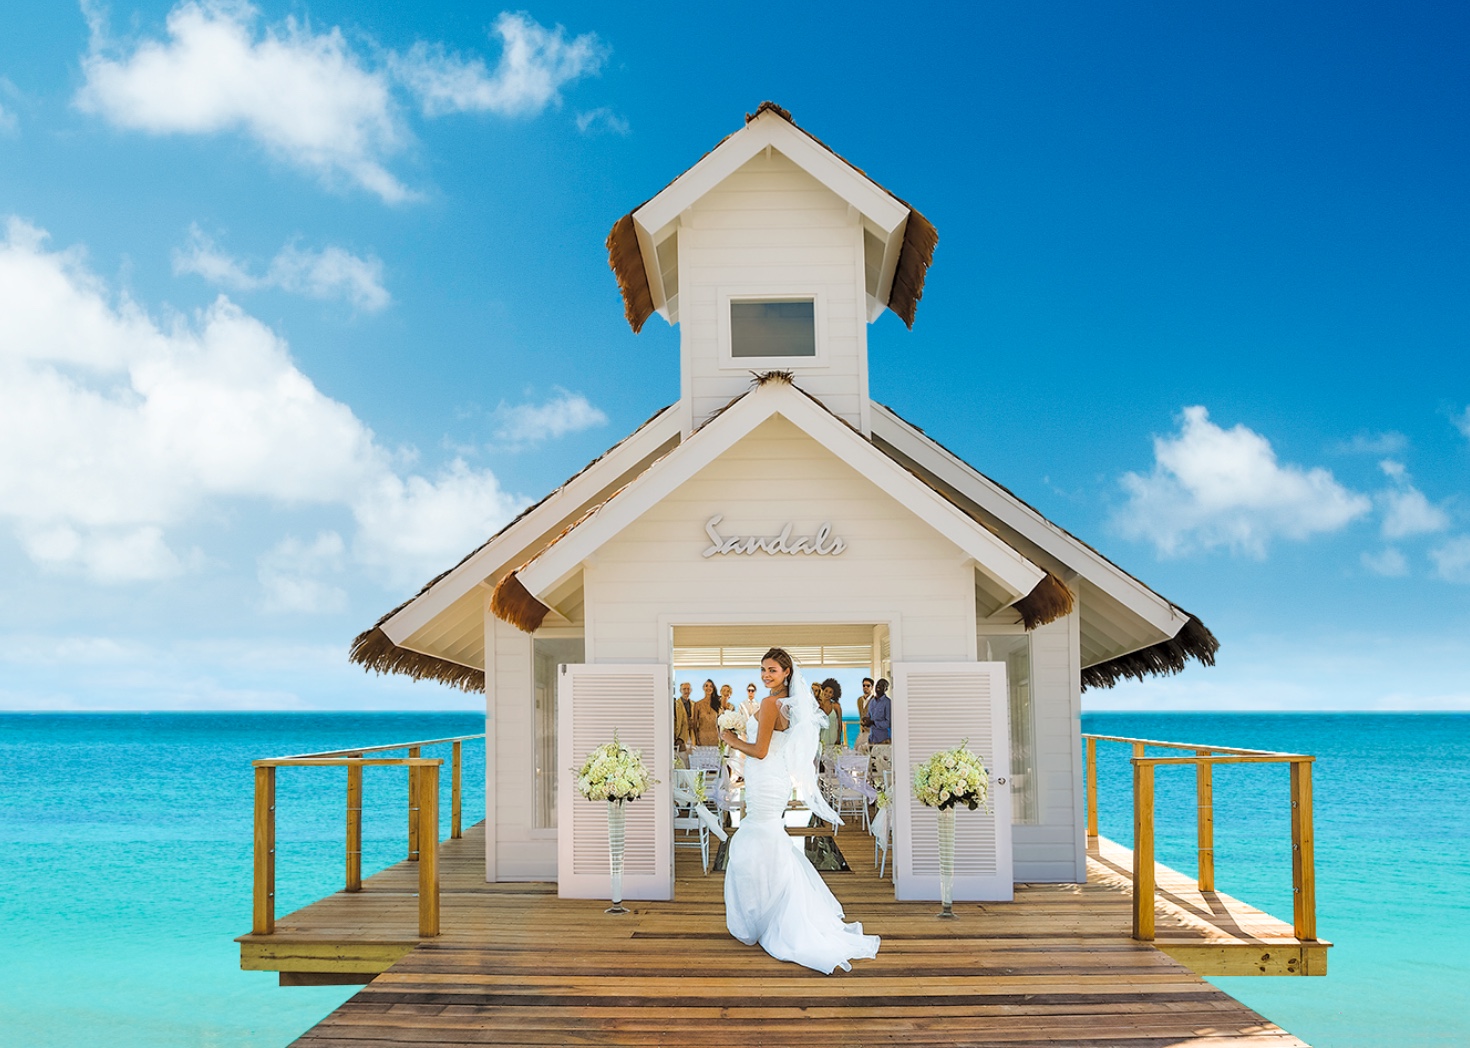 11 Tips for Planning a Sandals Destination Wedding - Amy Fillinger | Hawaii  Travel Agent